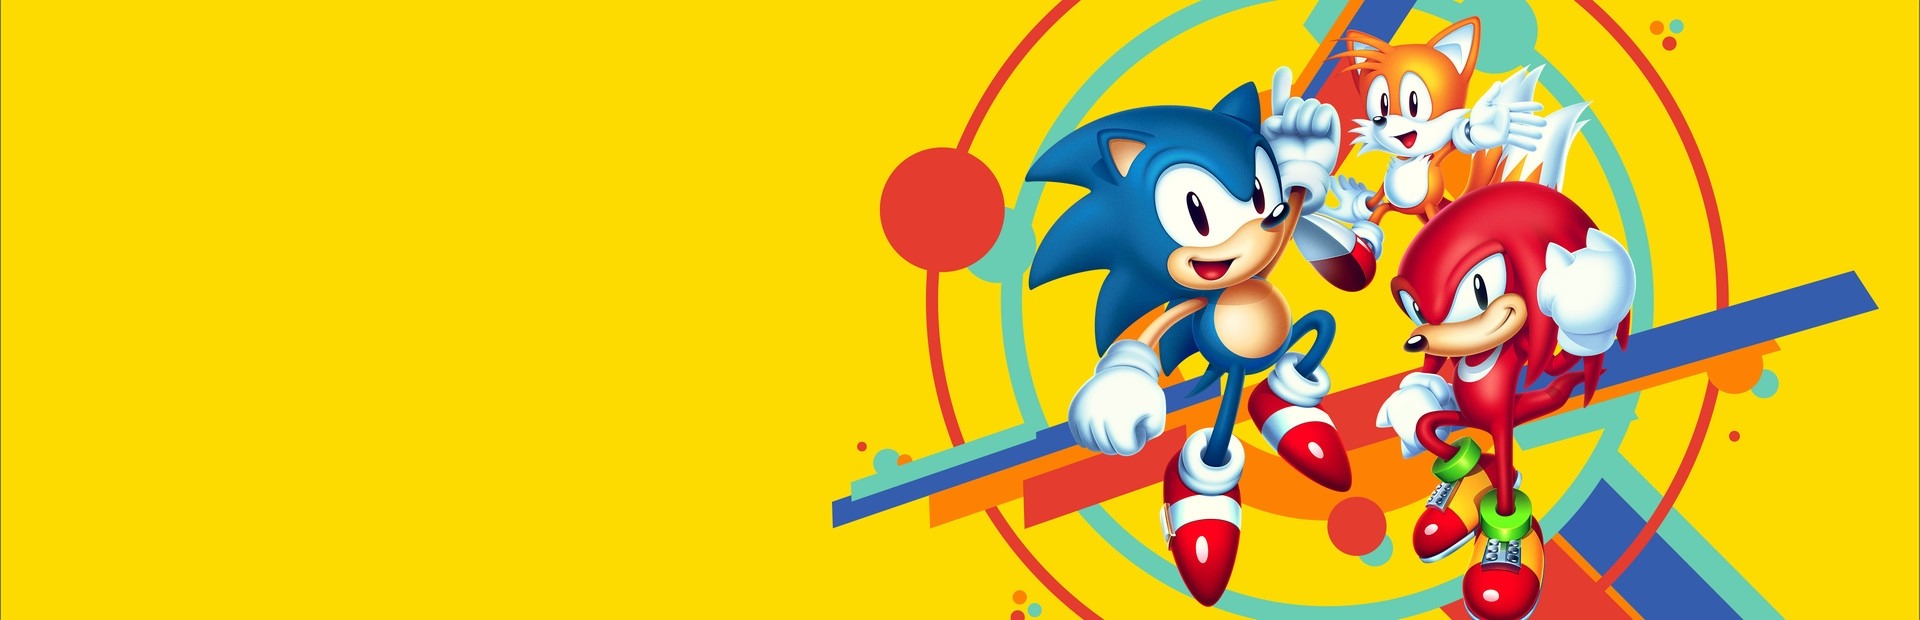 Sonic Mania Xbox One (UK)